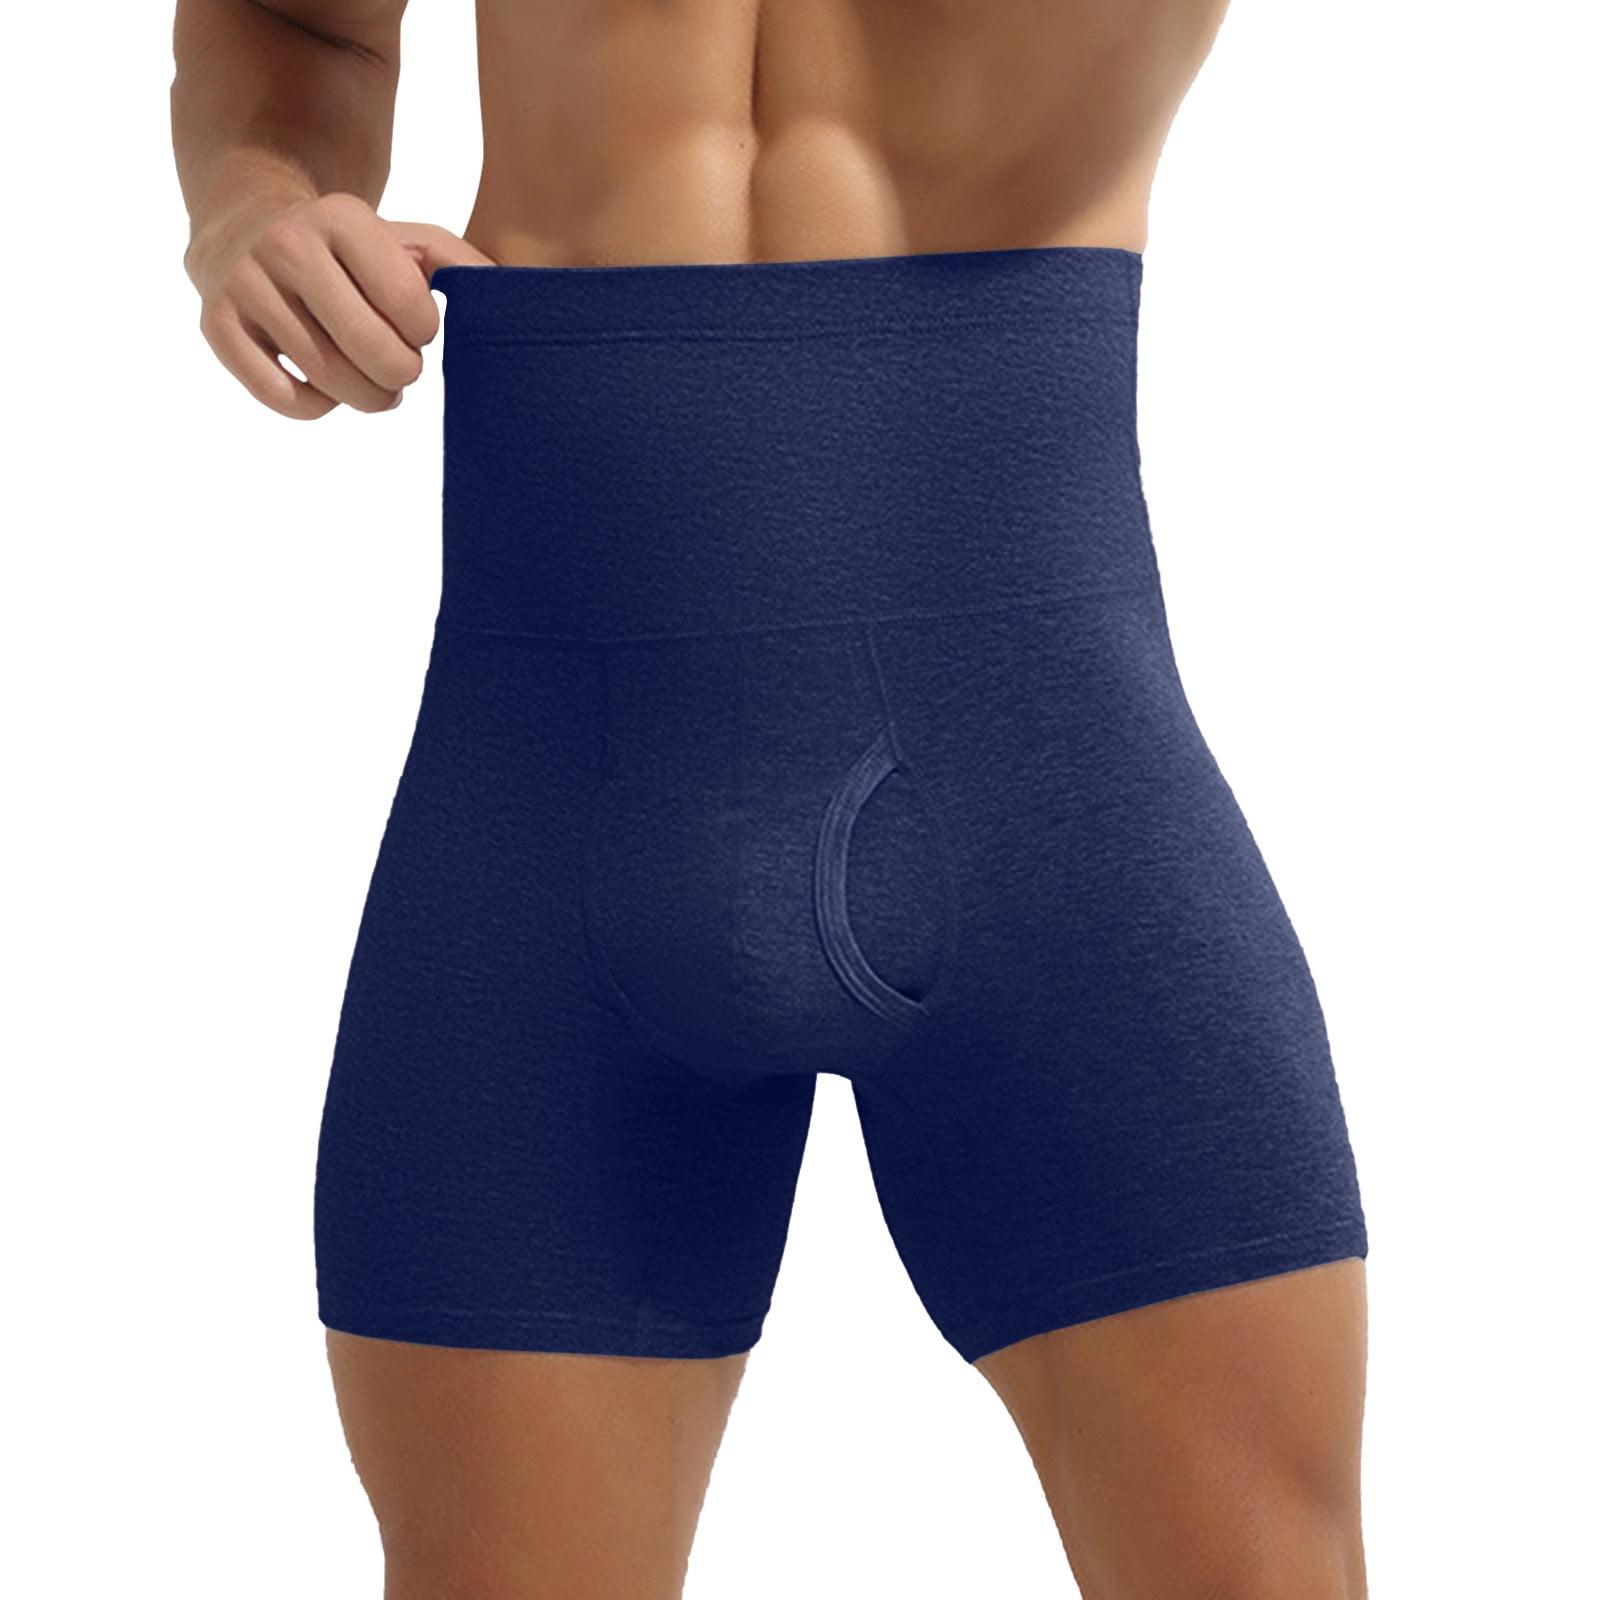 Underwear for Men Pack Boxers Boxer Briefs Solid Blue Xxxxl 1-Pack ...